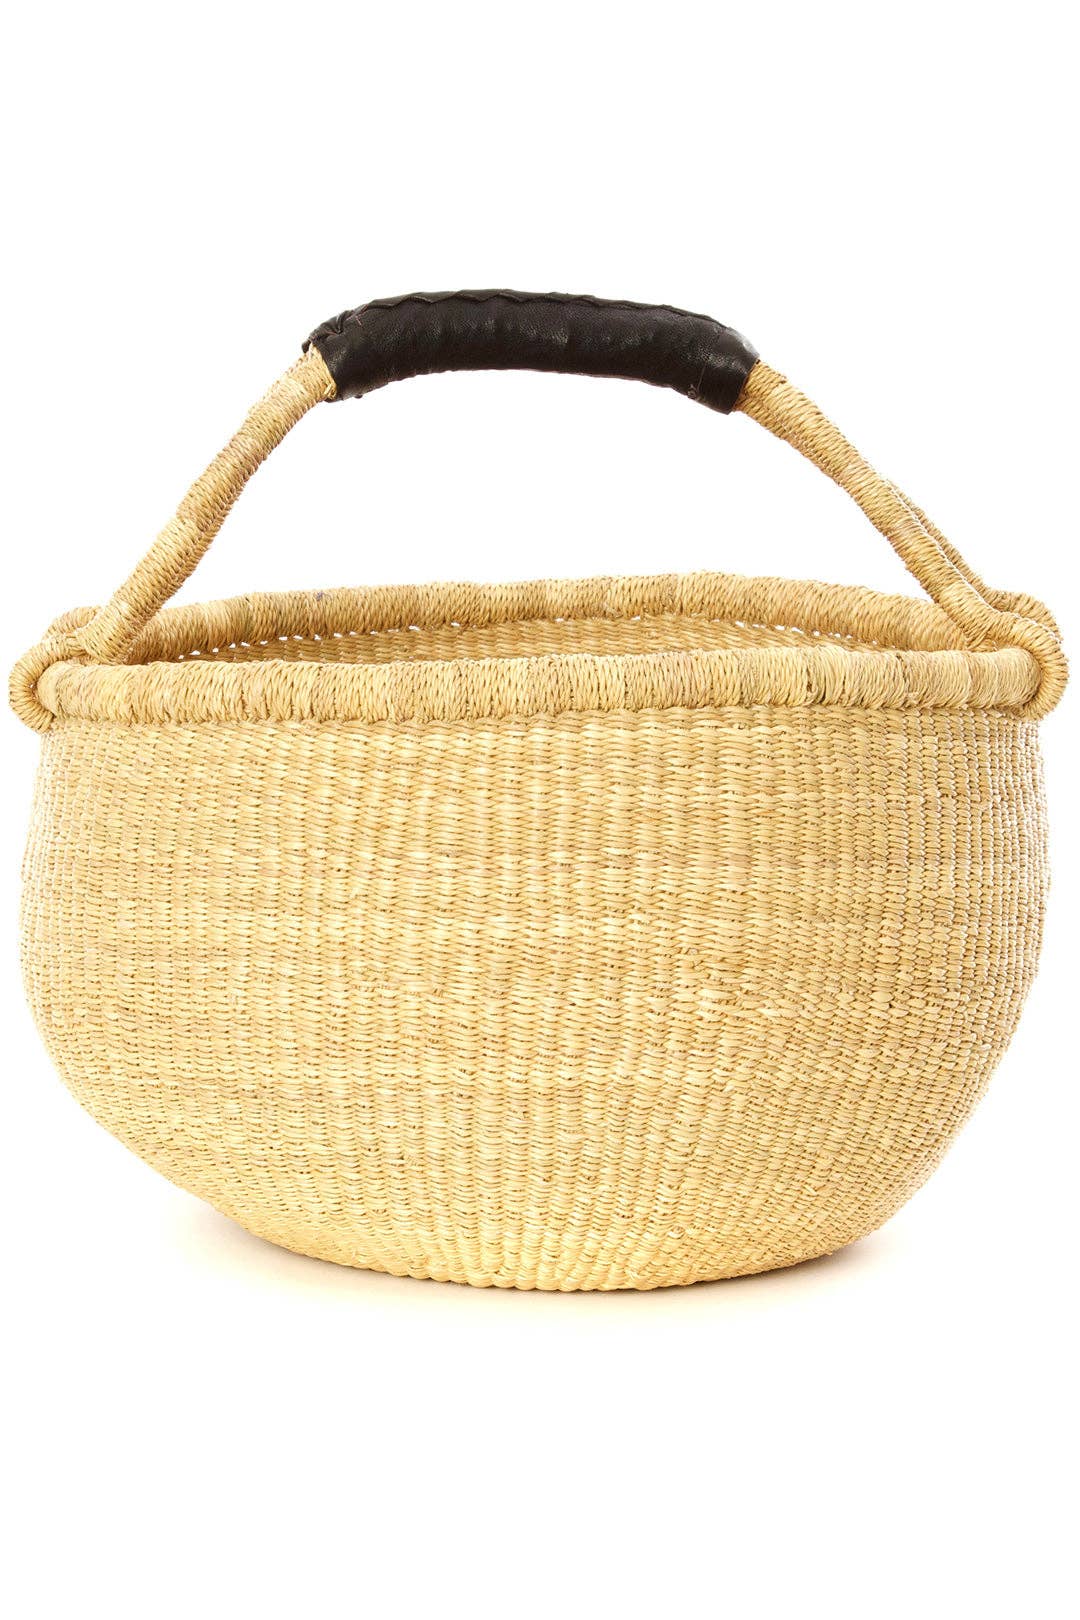 Basic Bolga Farmer's Market Shopper Basket